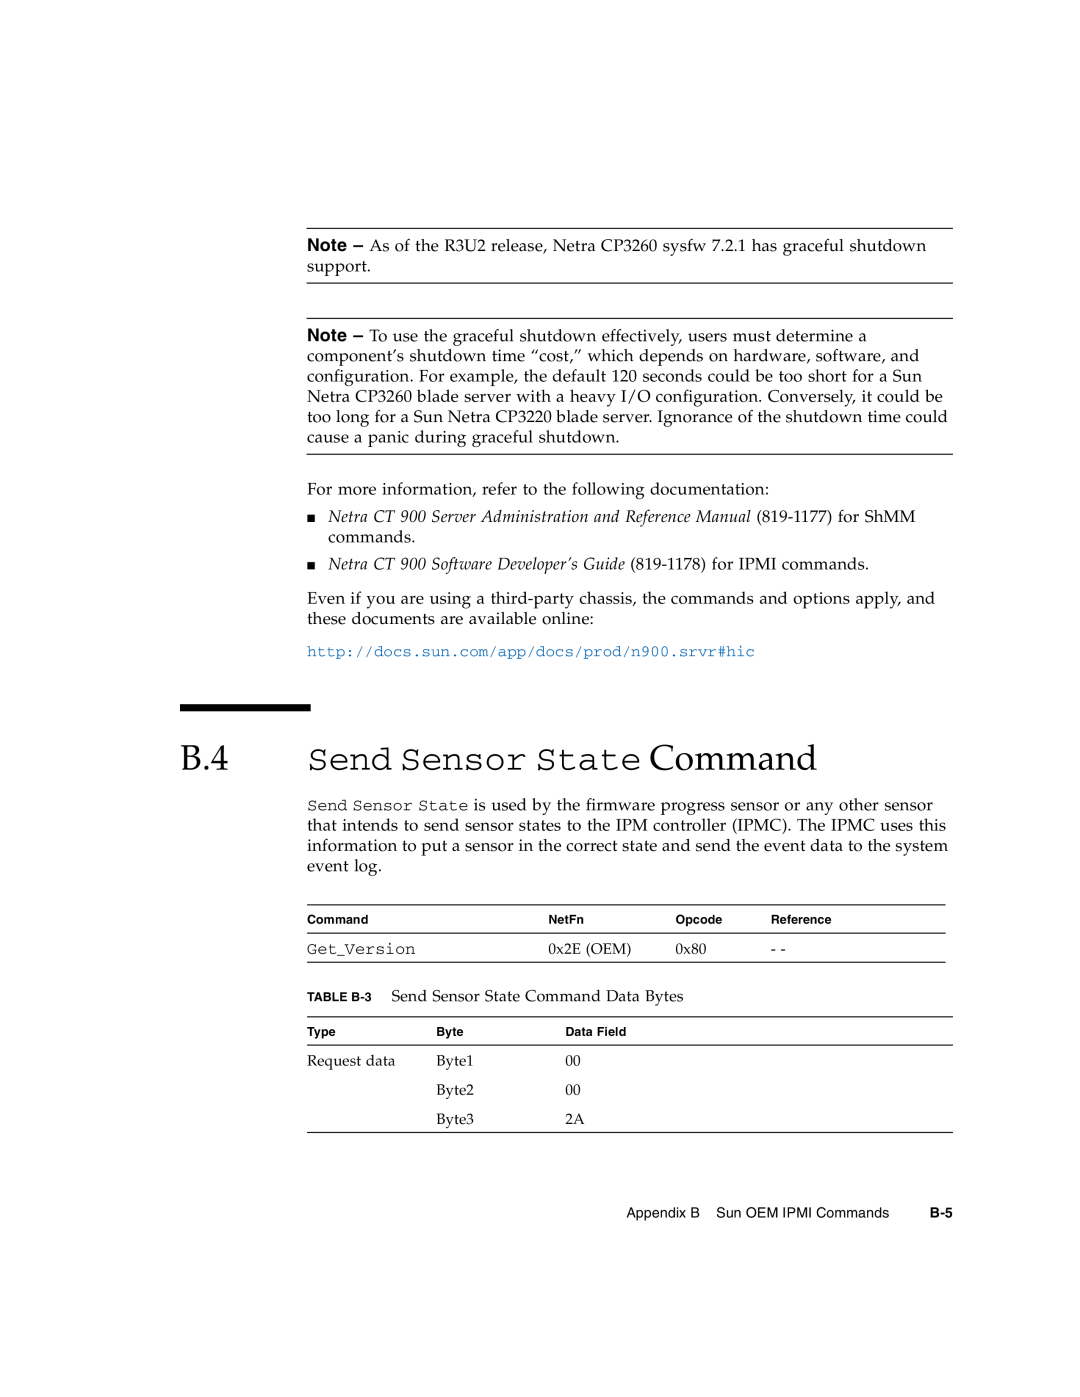 Sun Microsystems CP3260 B.4 Send Sensor State Command, Netra CT 900 Software Developer’s Guide 819-1178 for IPMI commands 